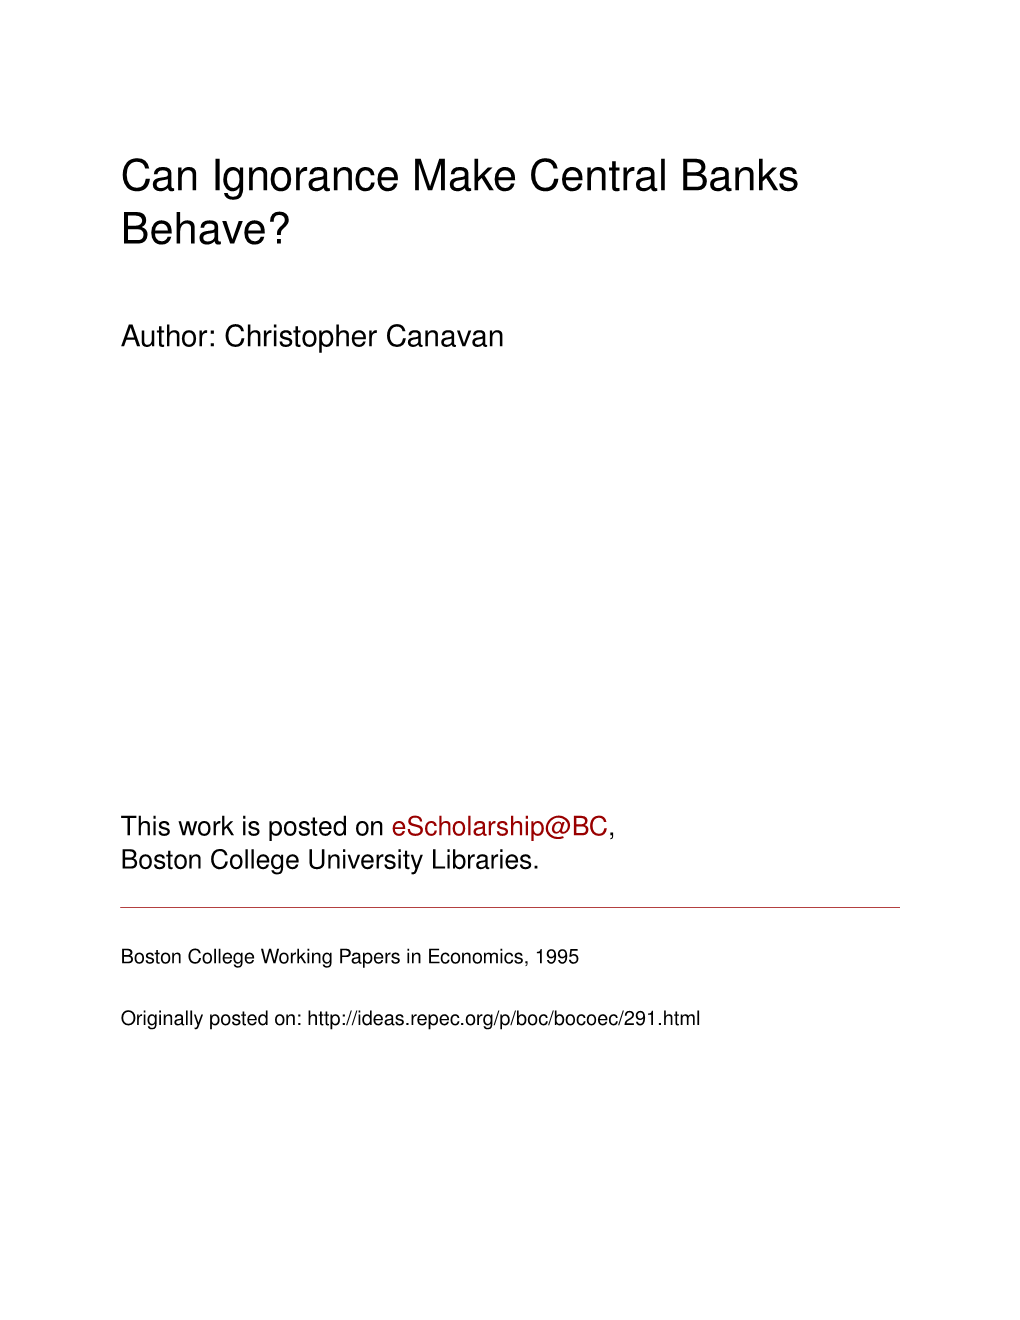 Can Ignorance Make Central Banks Behave?